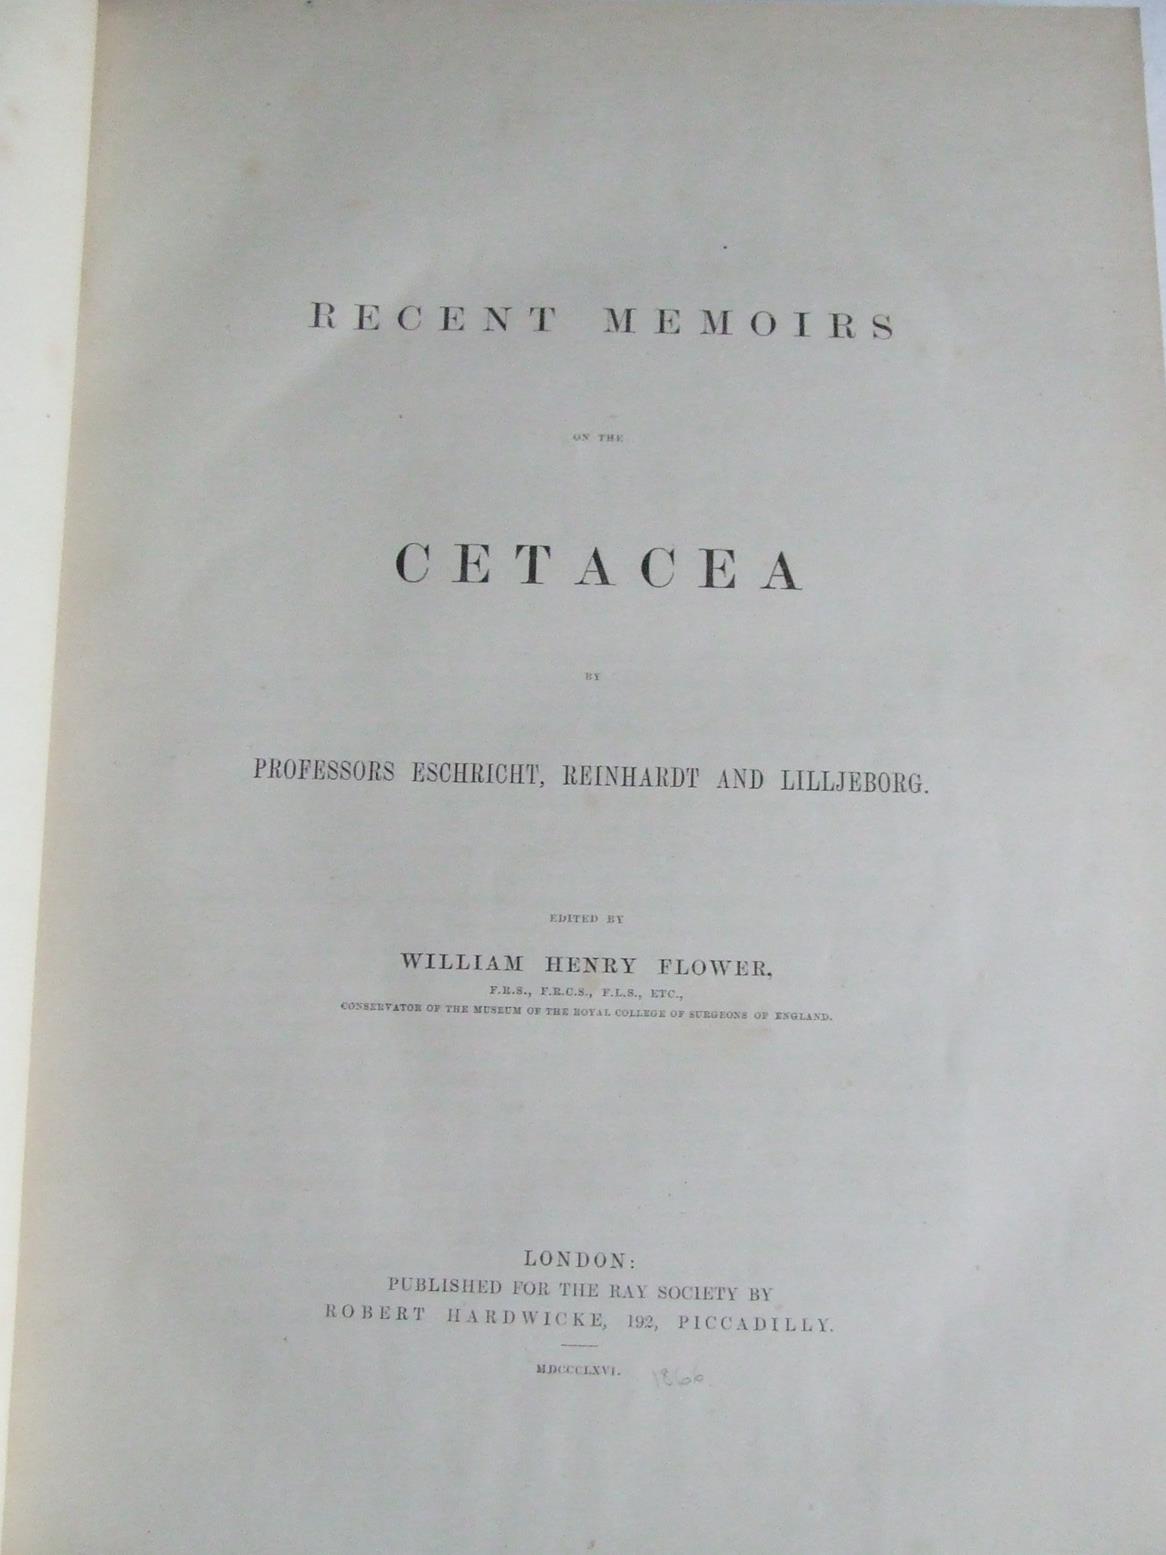 Recent Memoirs of the Cetacea